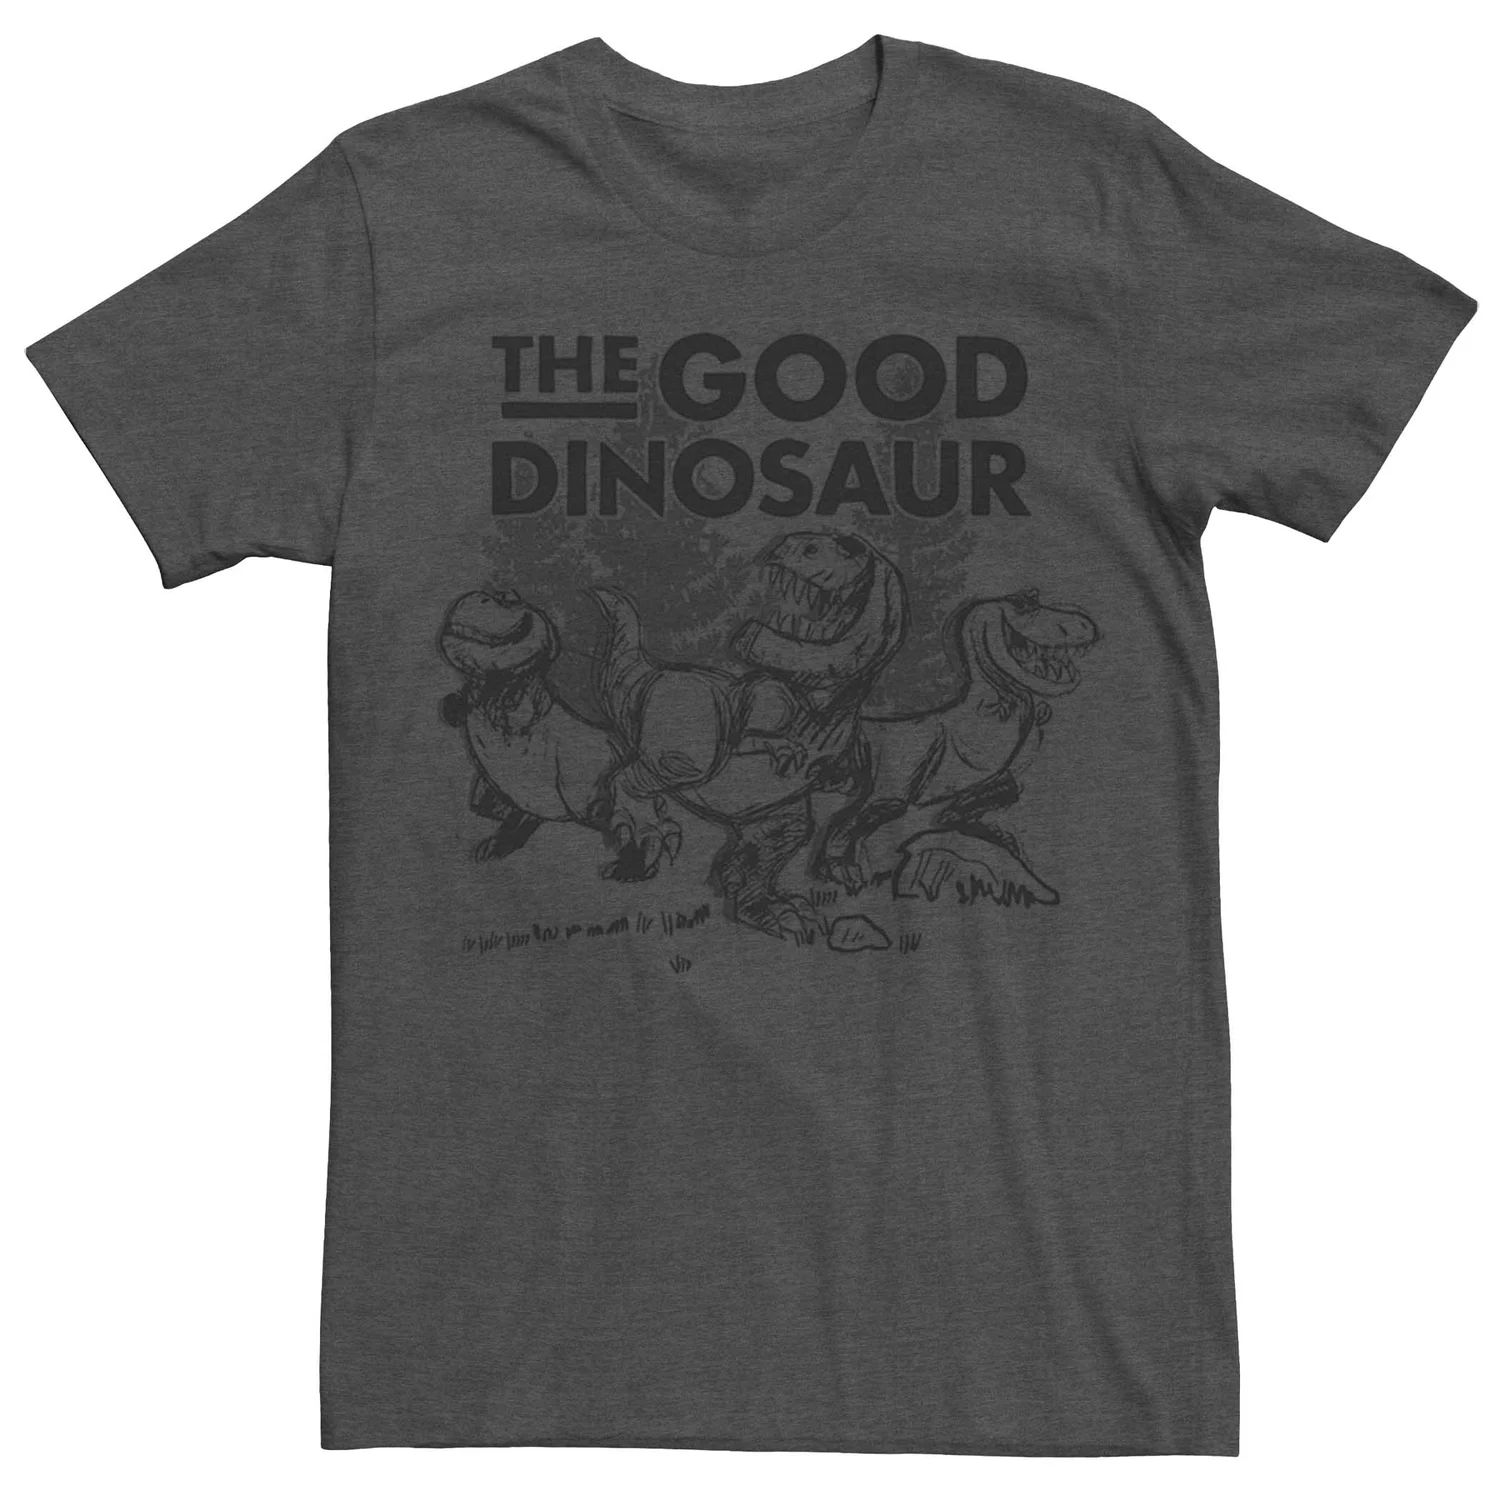 Мужская футболка Disney Pixar Good Dinosaur с эскизом Dino Group Licensed Character майка с эскизом супермама disney pixar 2 супермама licensed character